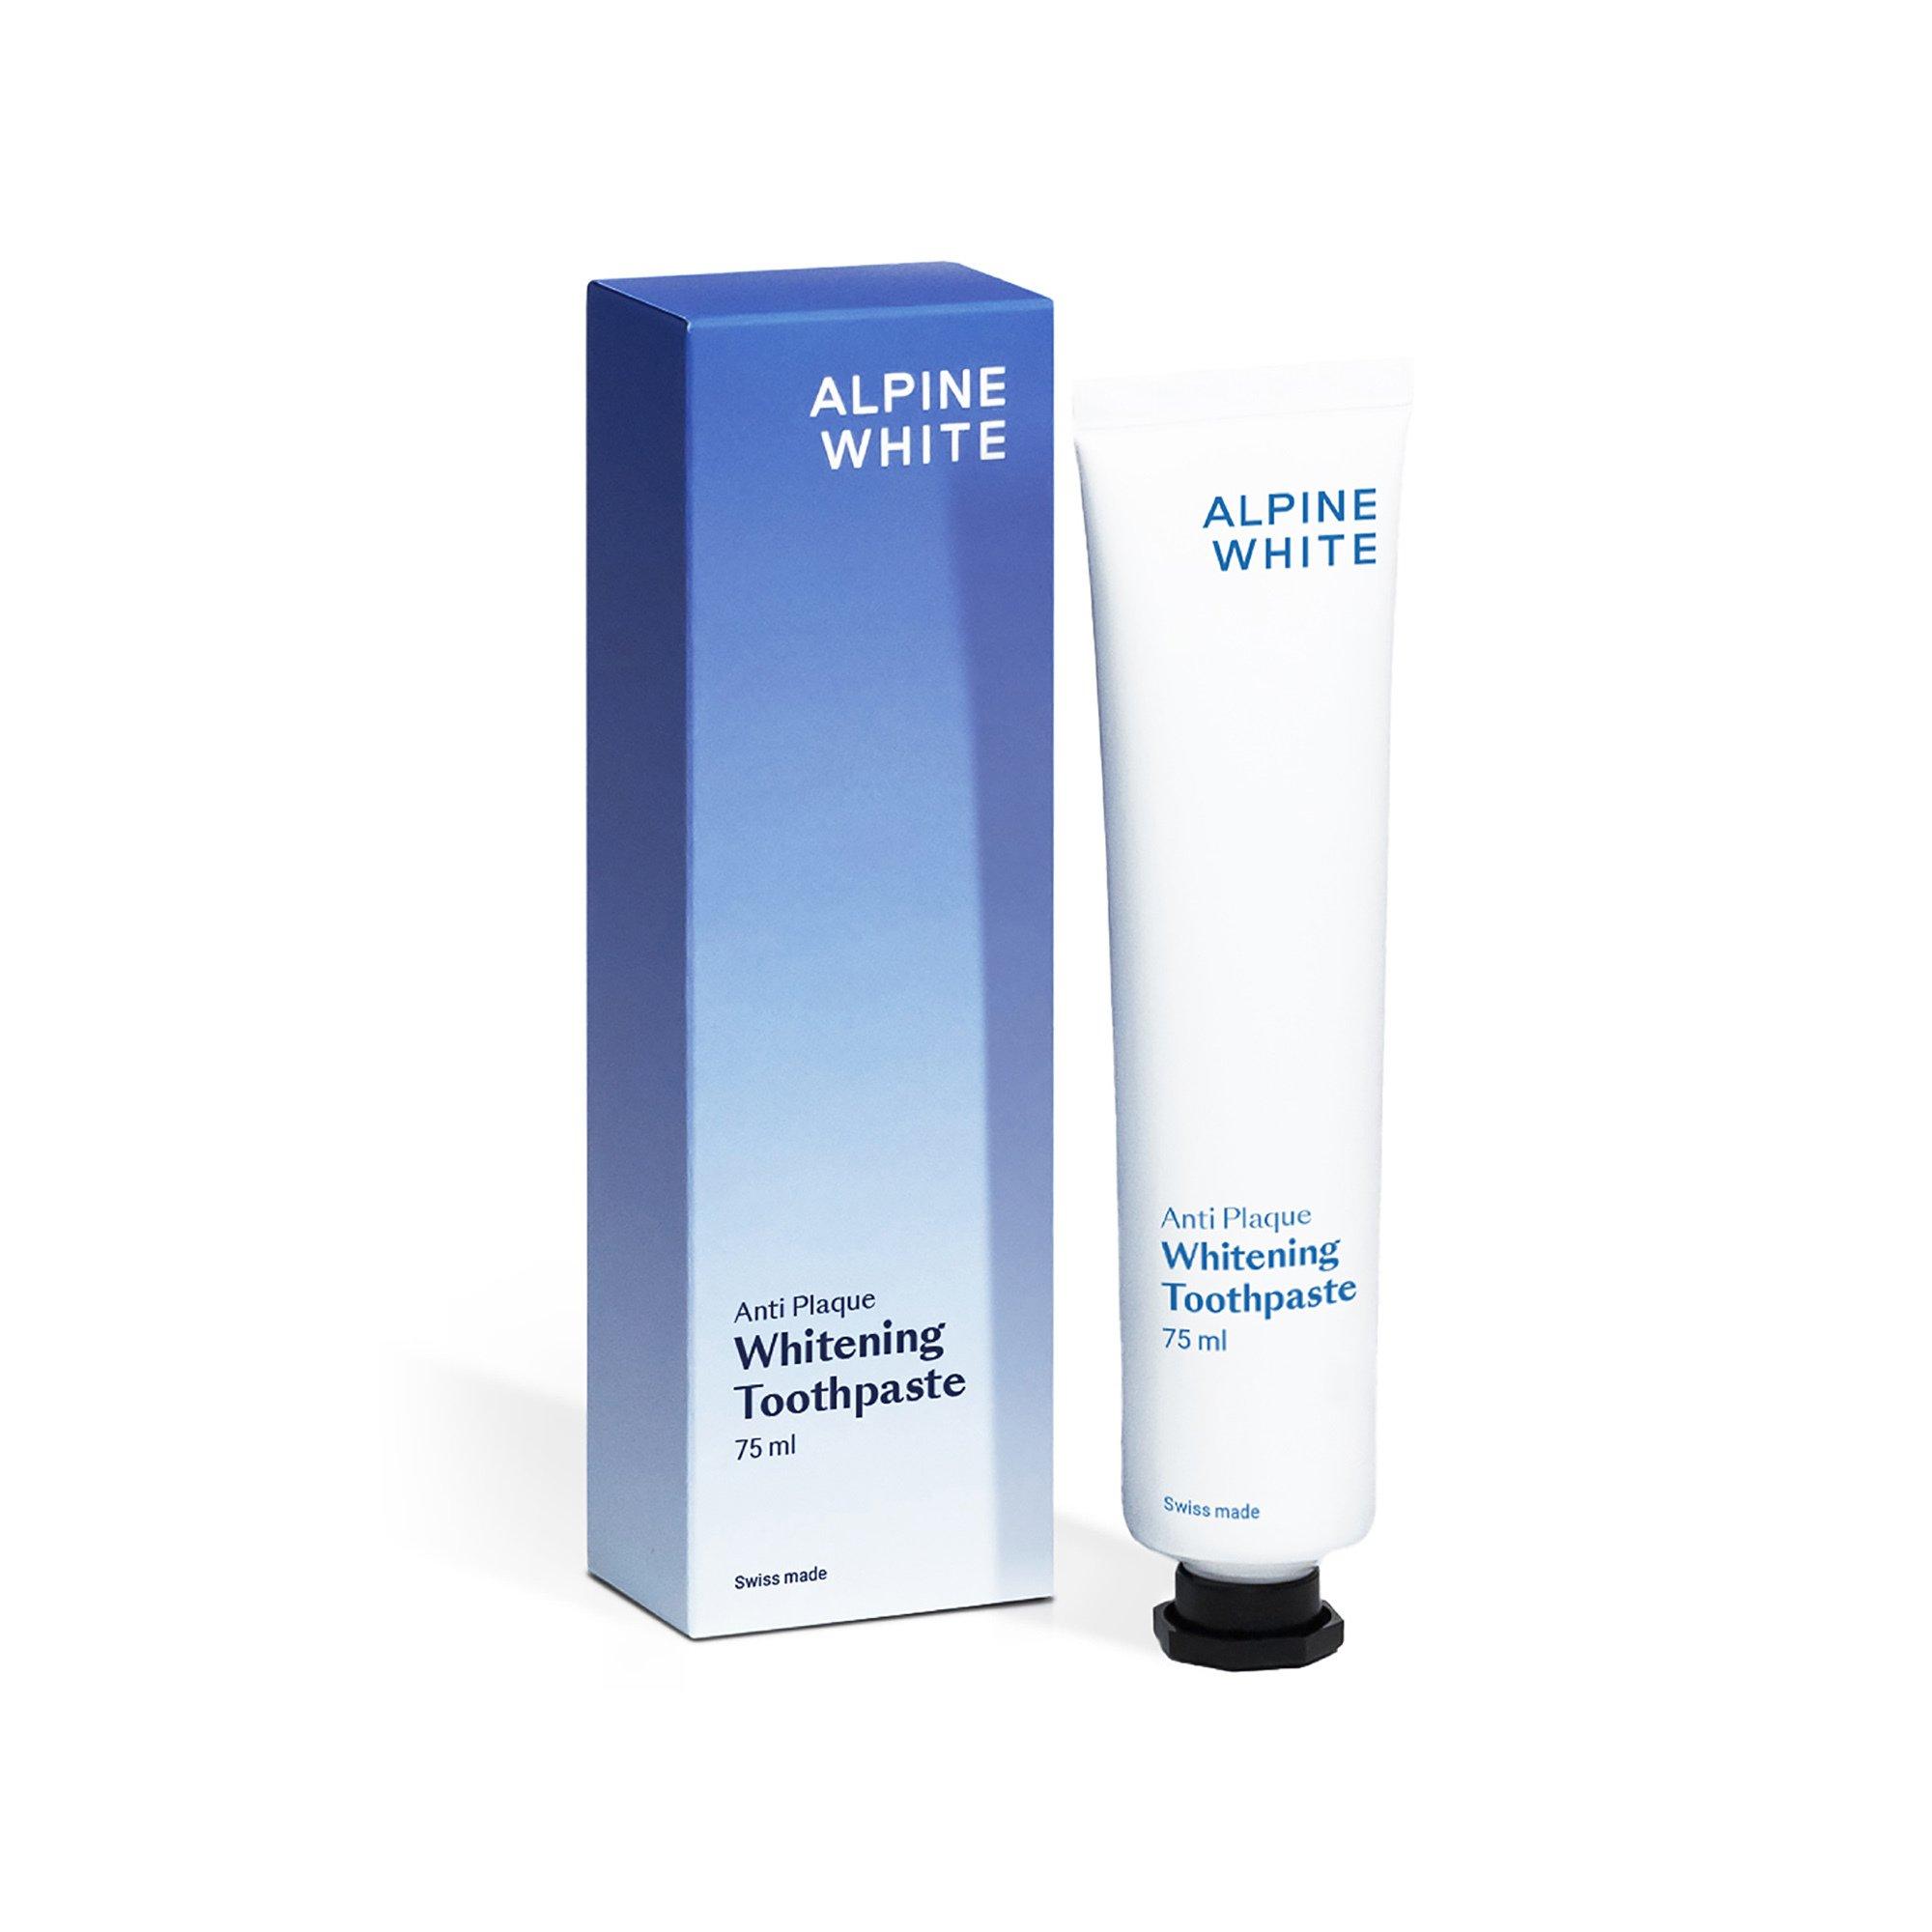 Image of ALPINE WHITE Whitening Toothpaste Anti Plaque - 75ml